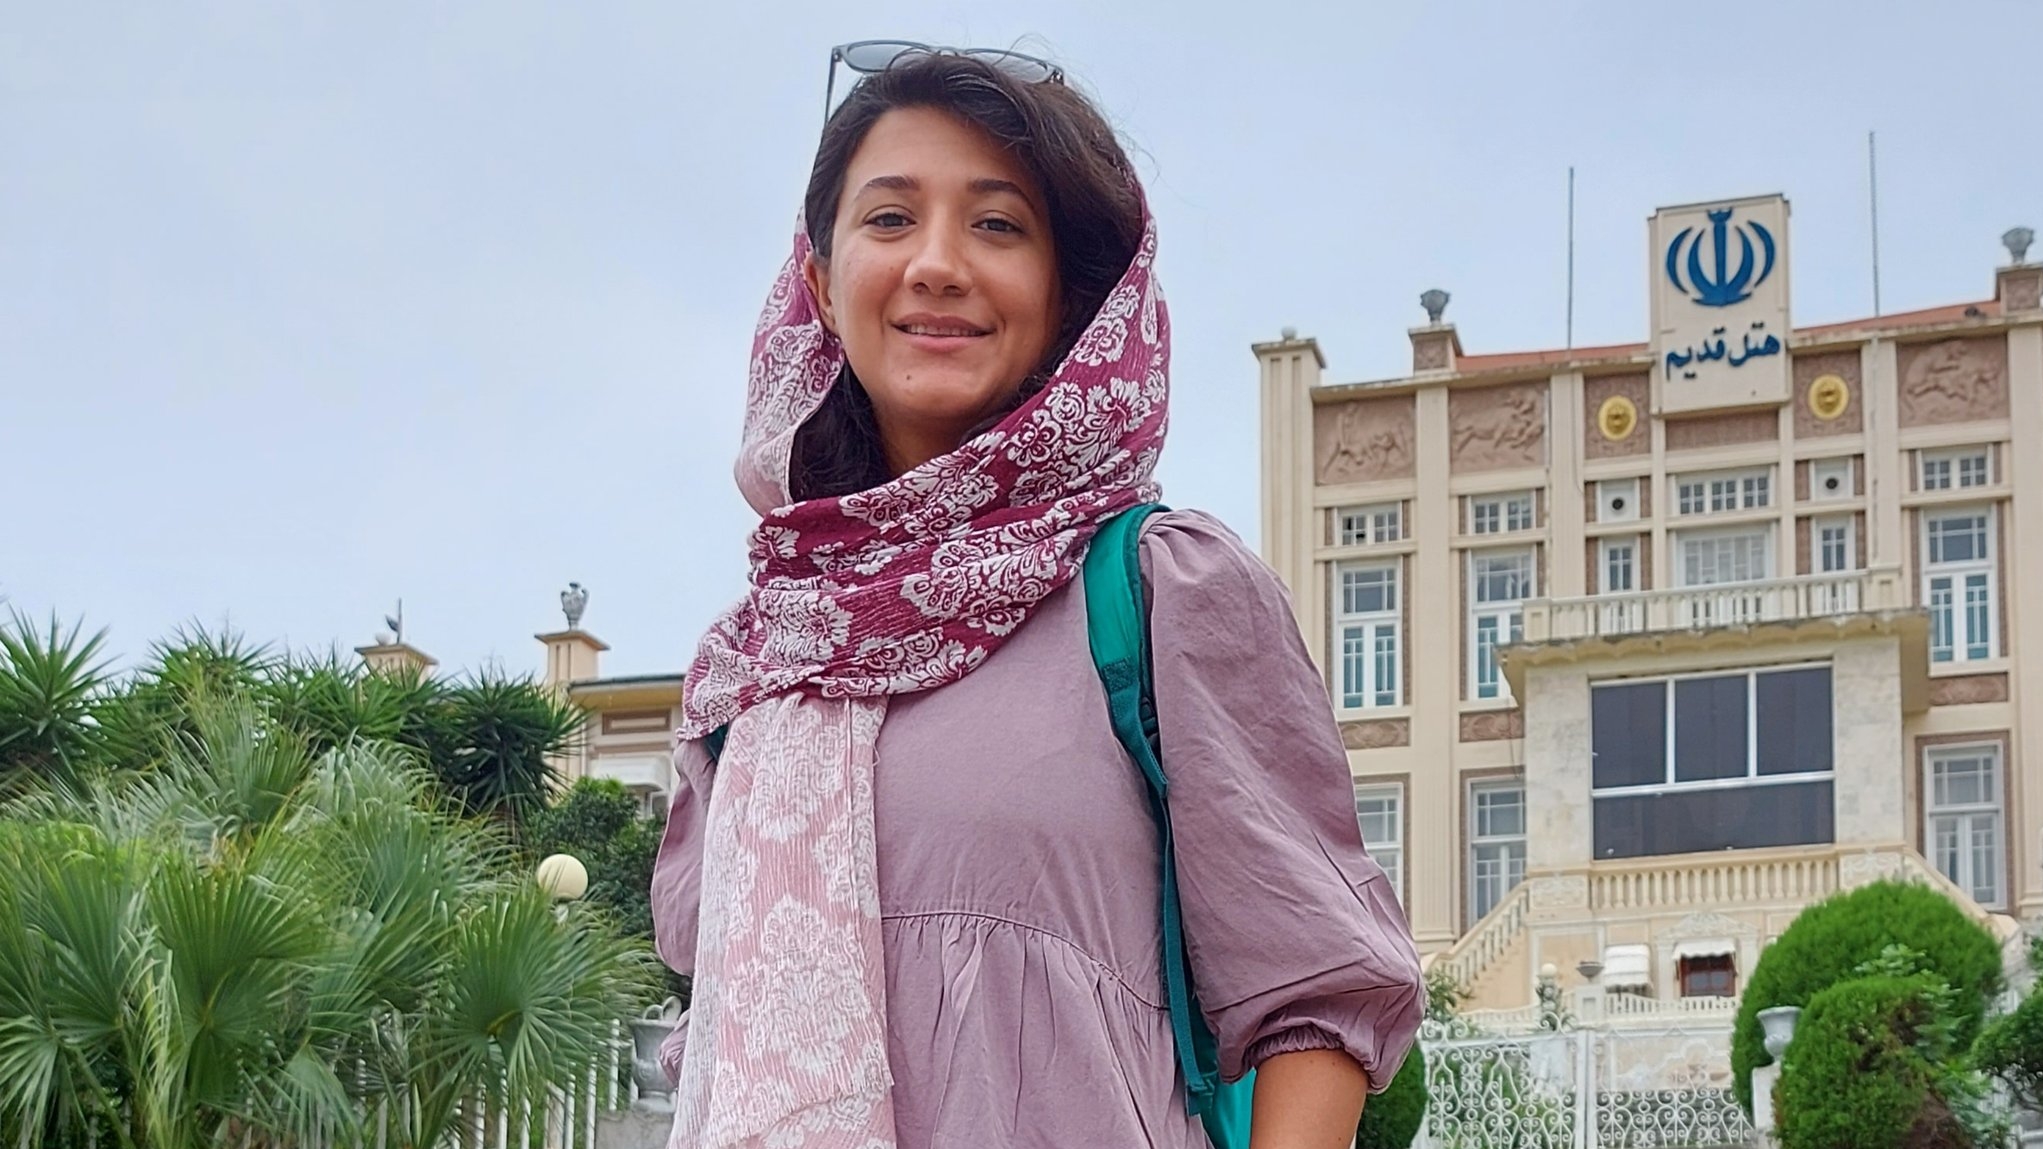 Comenzó en Irán el juicio contra la periodista Niloofar Hamidi, la primera que informó sobre el caso de Mahsa Amini